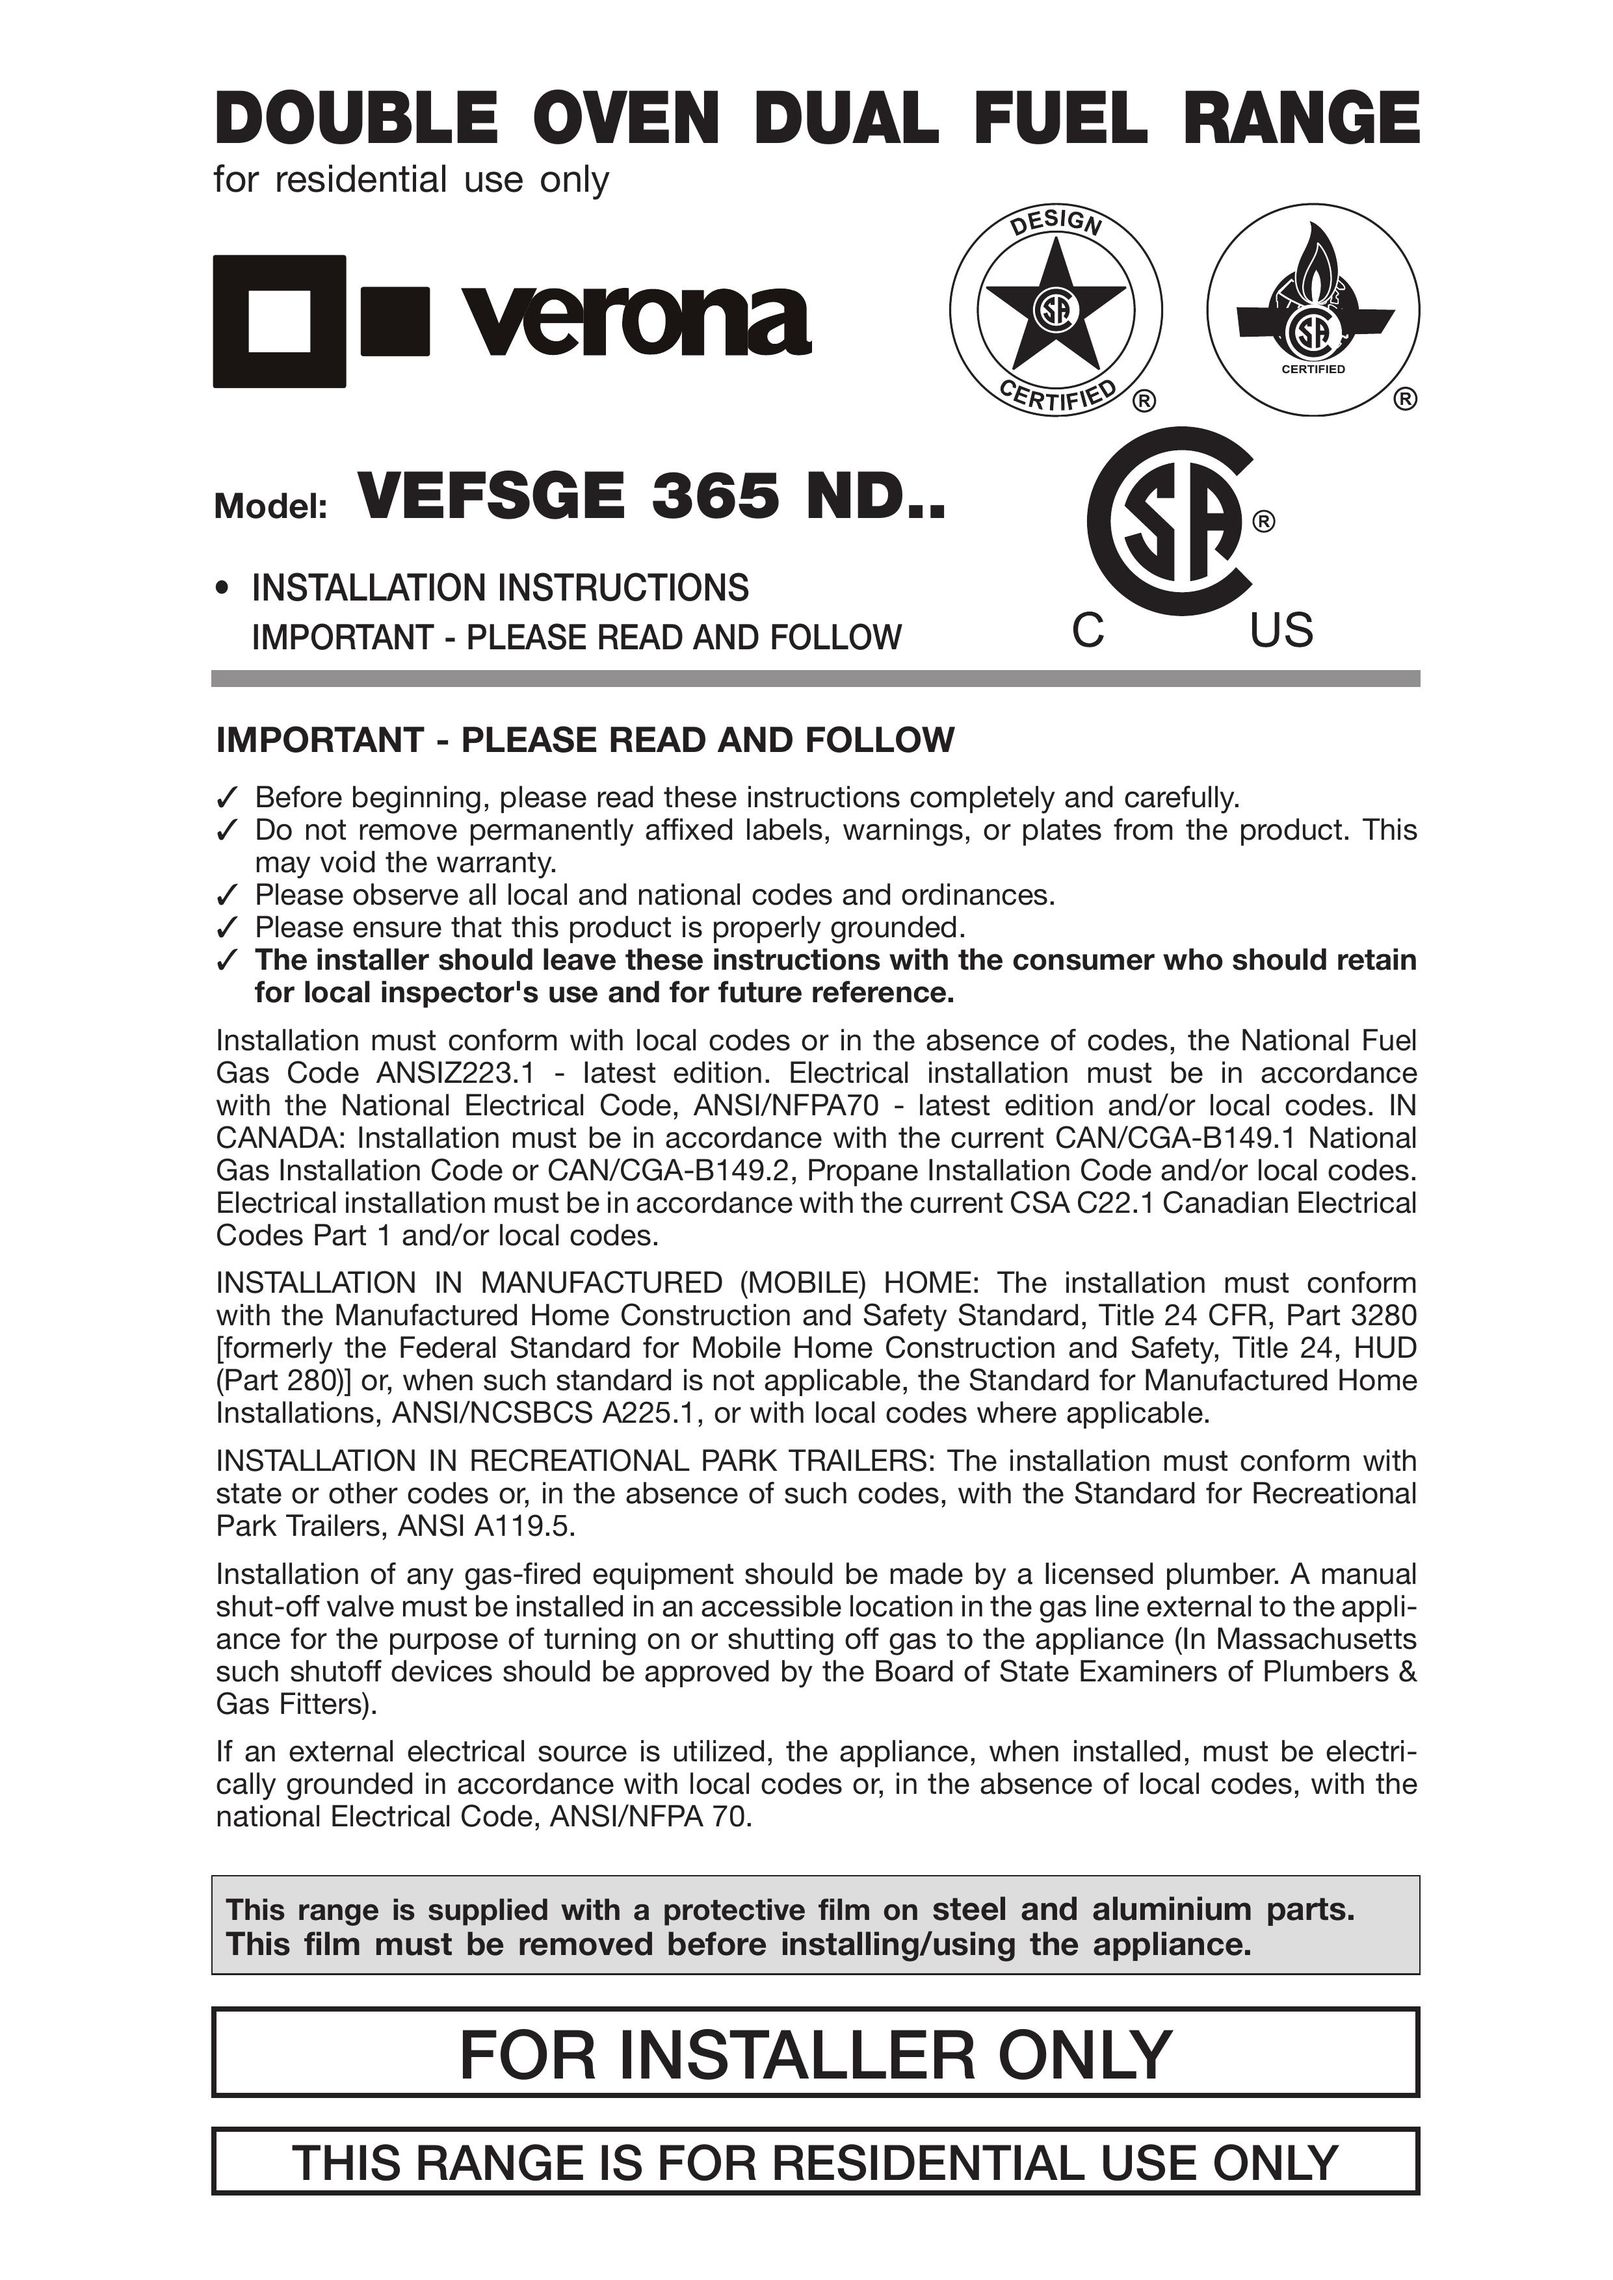 Verona VEFSGE 365 ND Double Oven User Manual